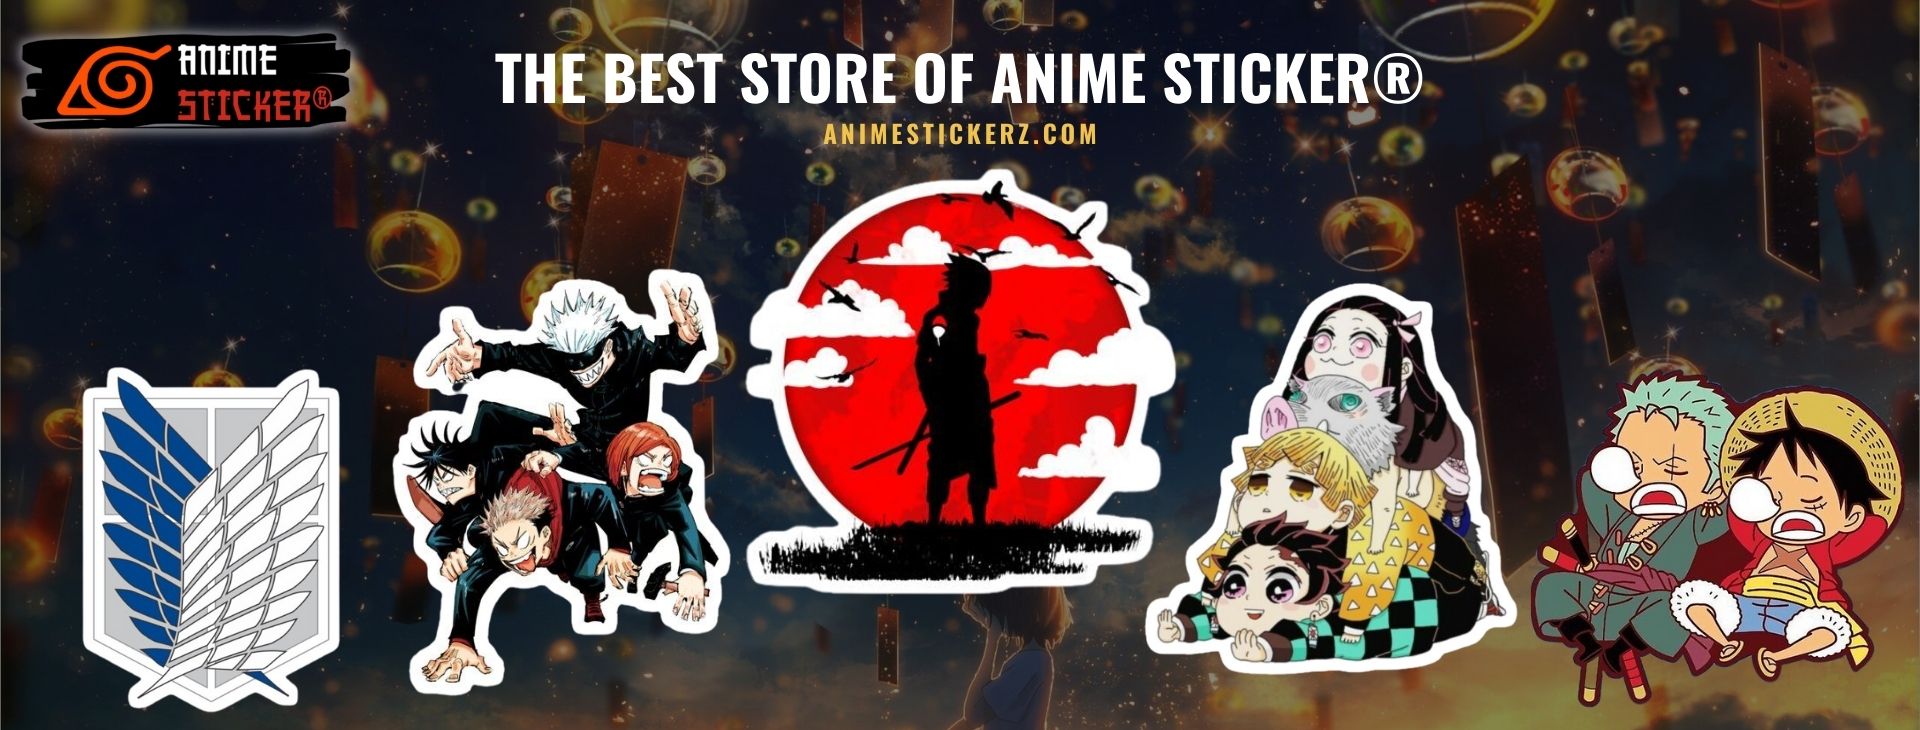 Anime Sticker Web Banner - Anime Stickers